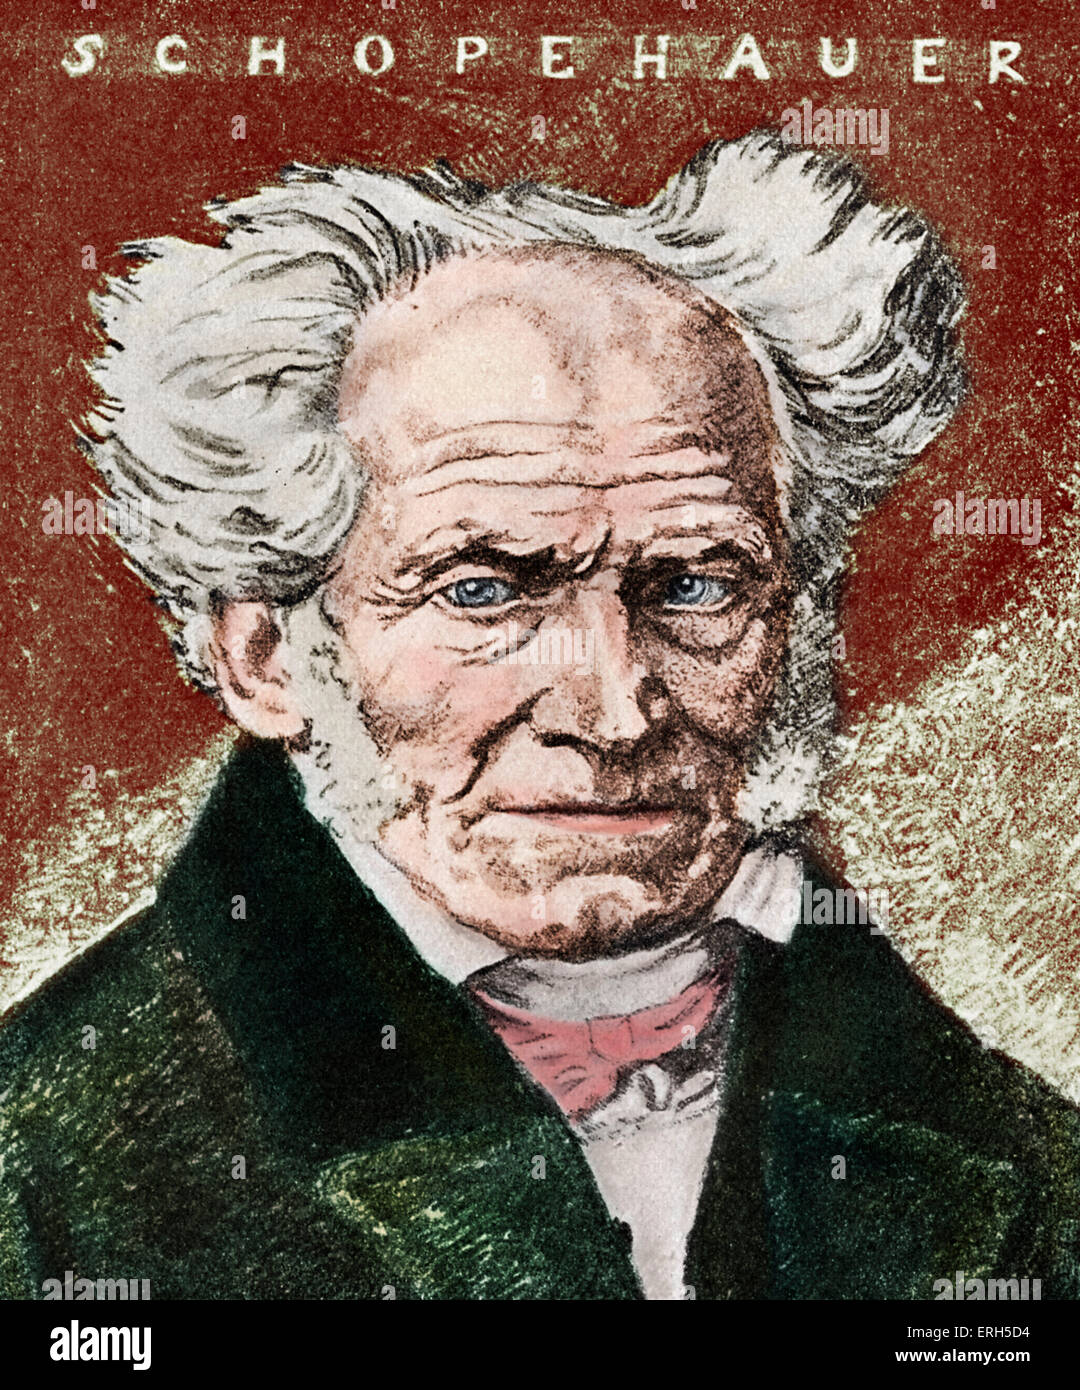 Arthur Schopenhauer drawn by Emil Orlik in 1920. German philosopher, 22 February 1788 - 21 September 1860 - Wagner was Stock Photo